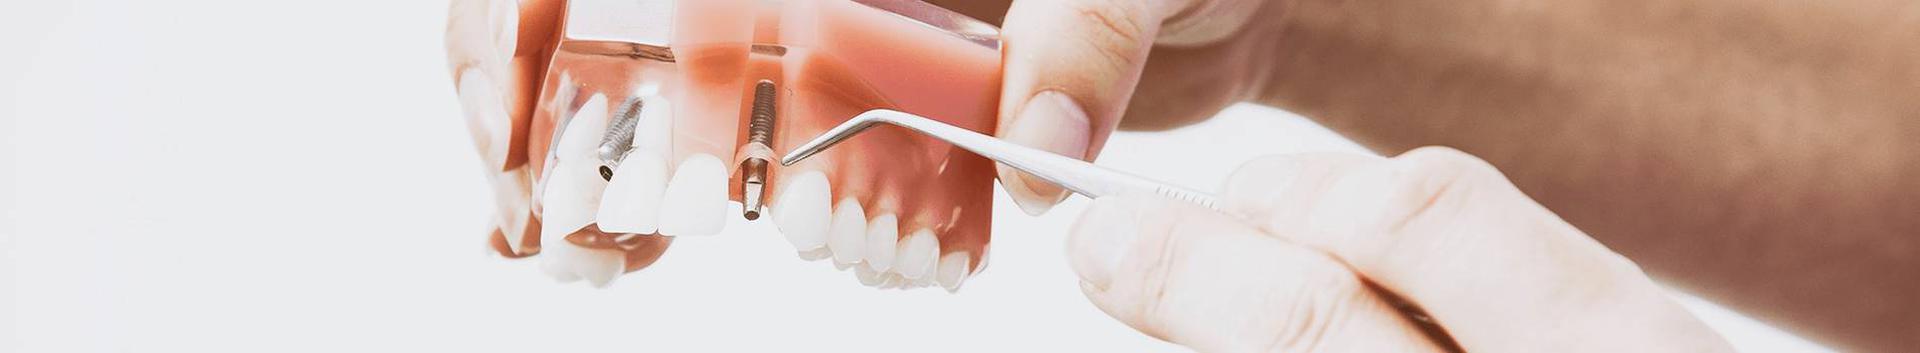 Dental Surgery, Treatment of tooth roots, Dental crowns and bridges, dental prosthetics, Dental prosthesis, dental x-ray, Treatment of gums, Gift Card, pediatric dental care